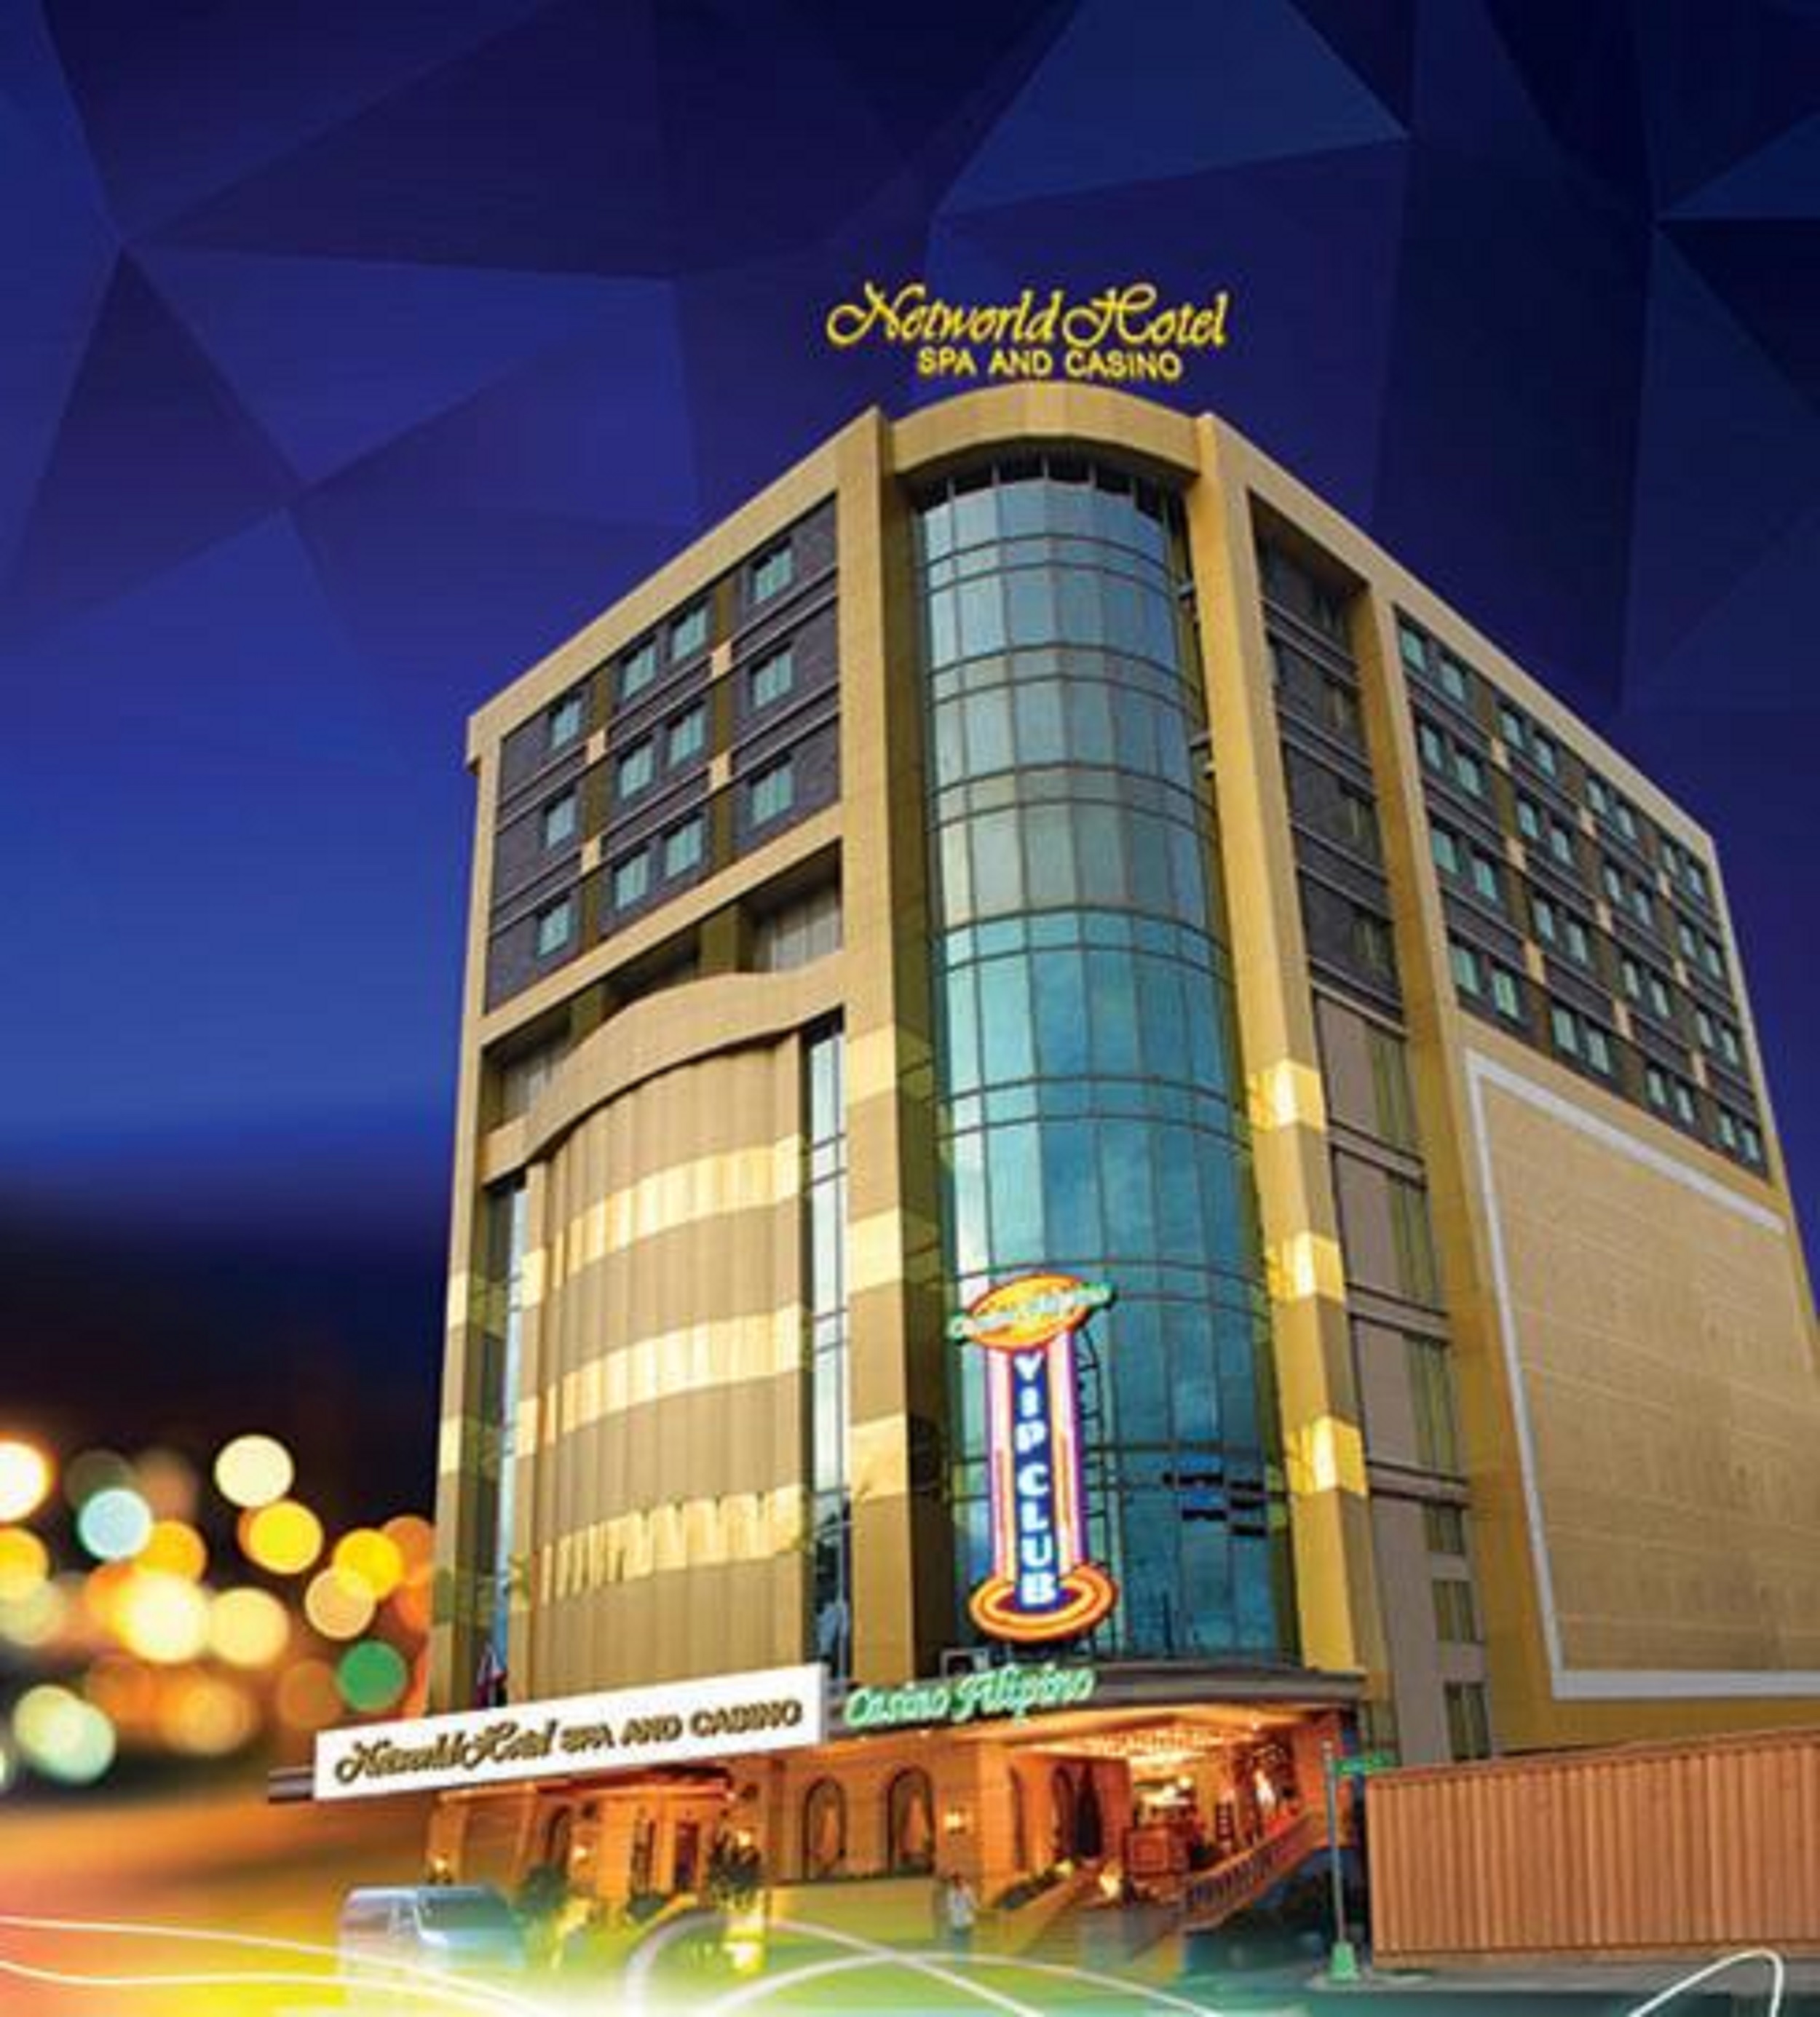 Networld Hotel Spa and Casino image